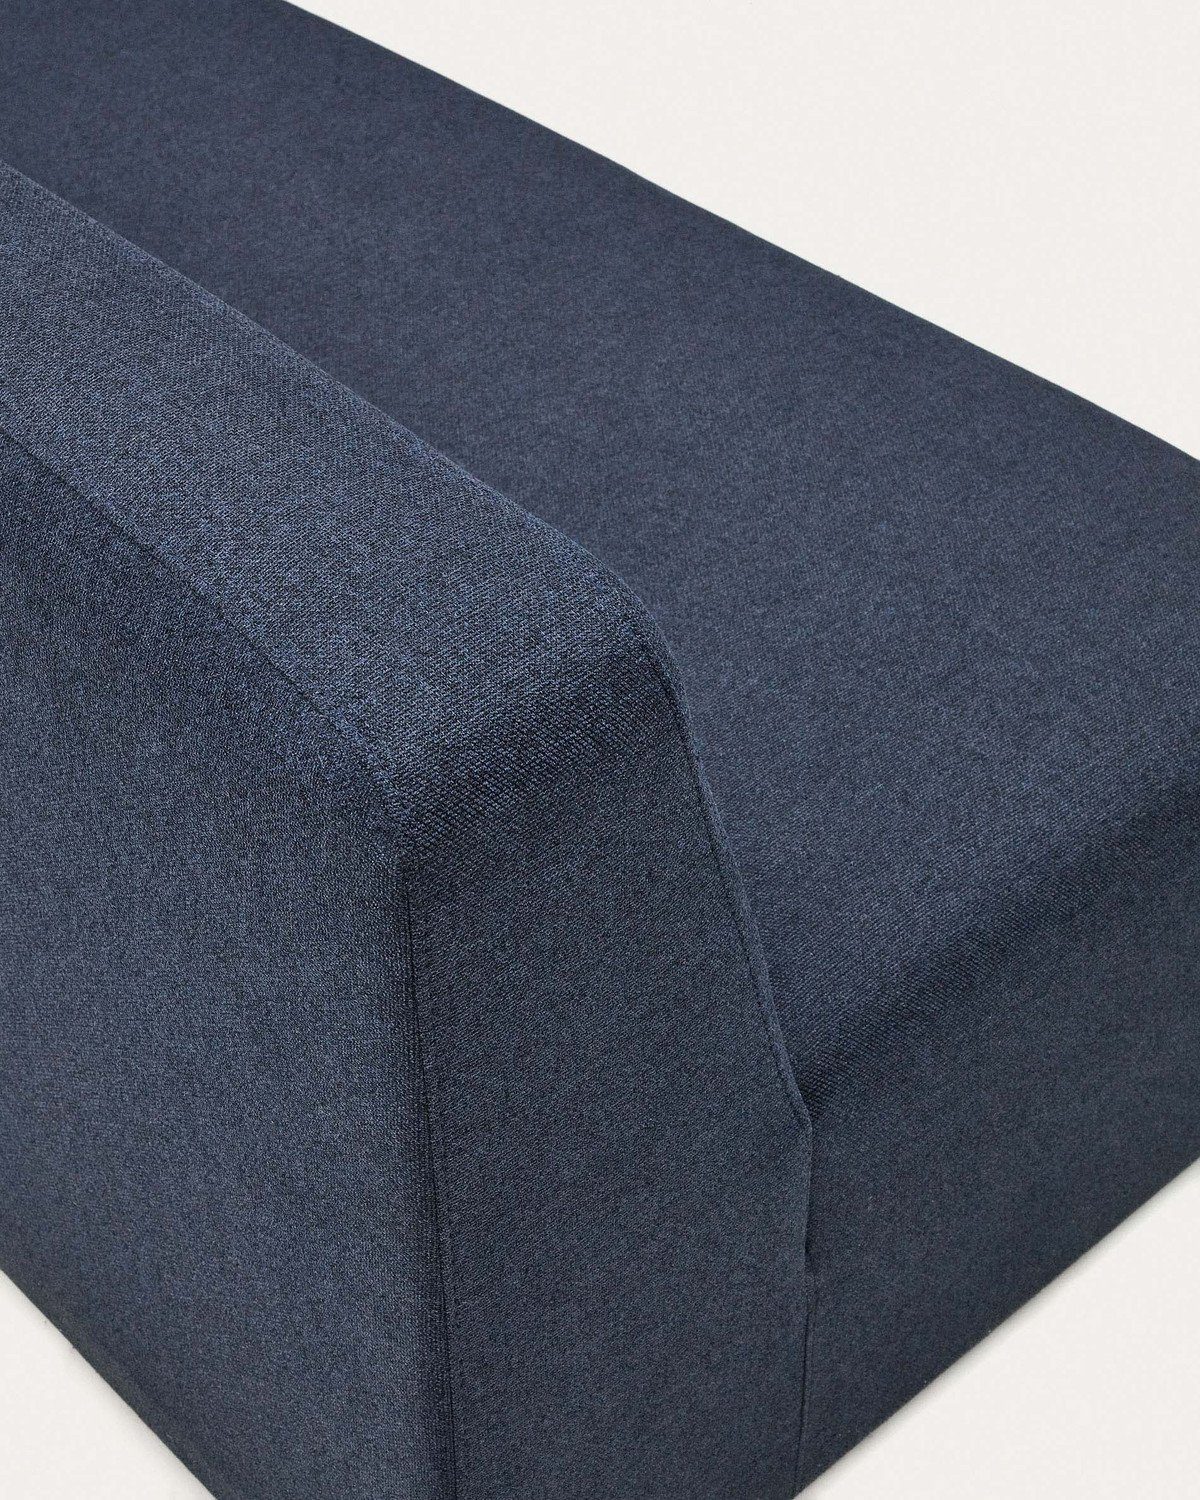 x 150x 78 cm Blau Modul Natur24 Neu Sofa Sitzgelegenheit Neom 89 2-Sitzer-Modul